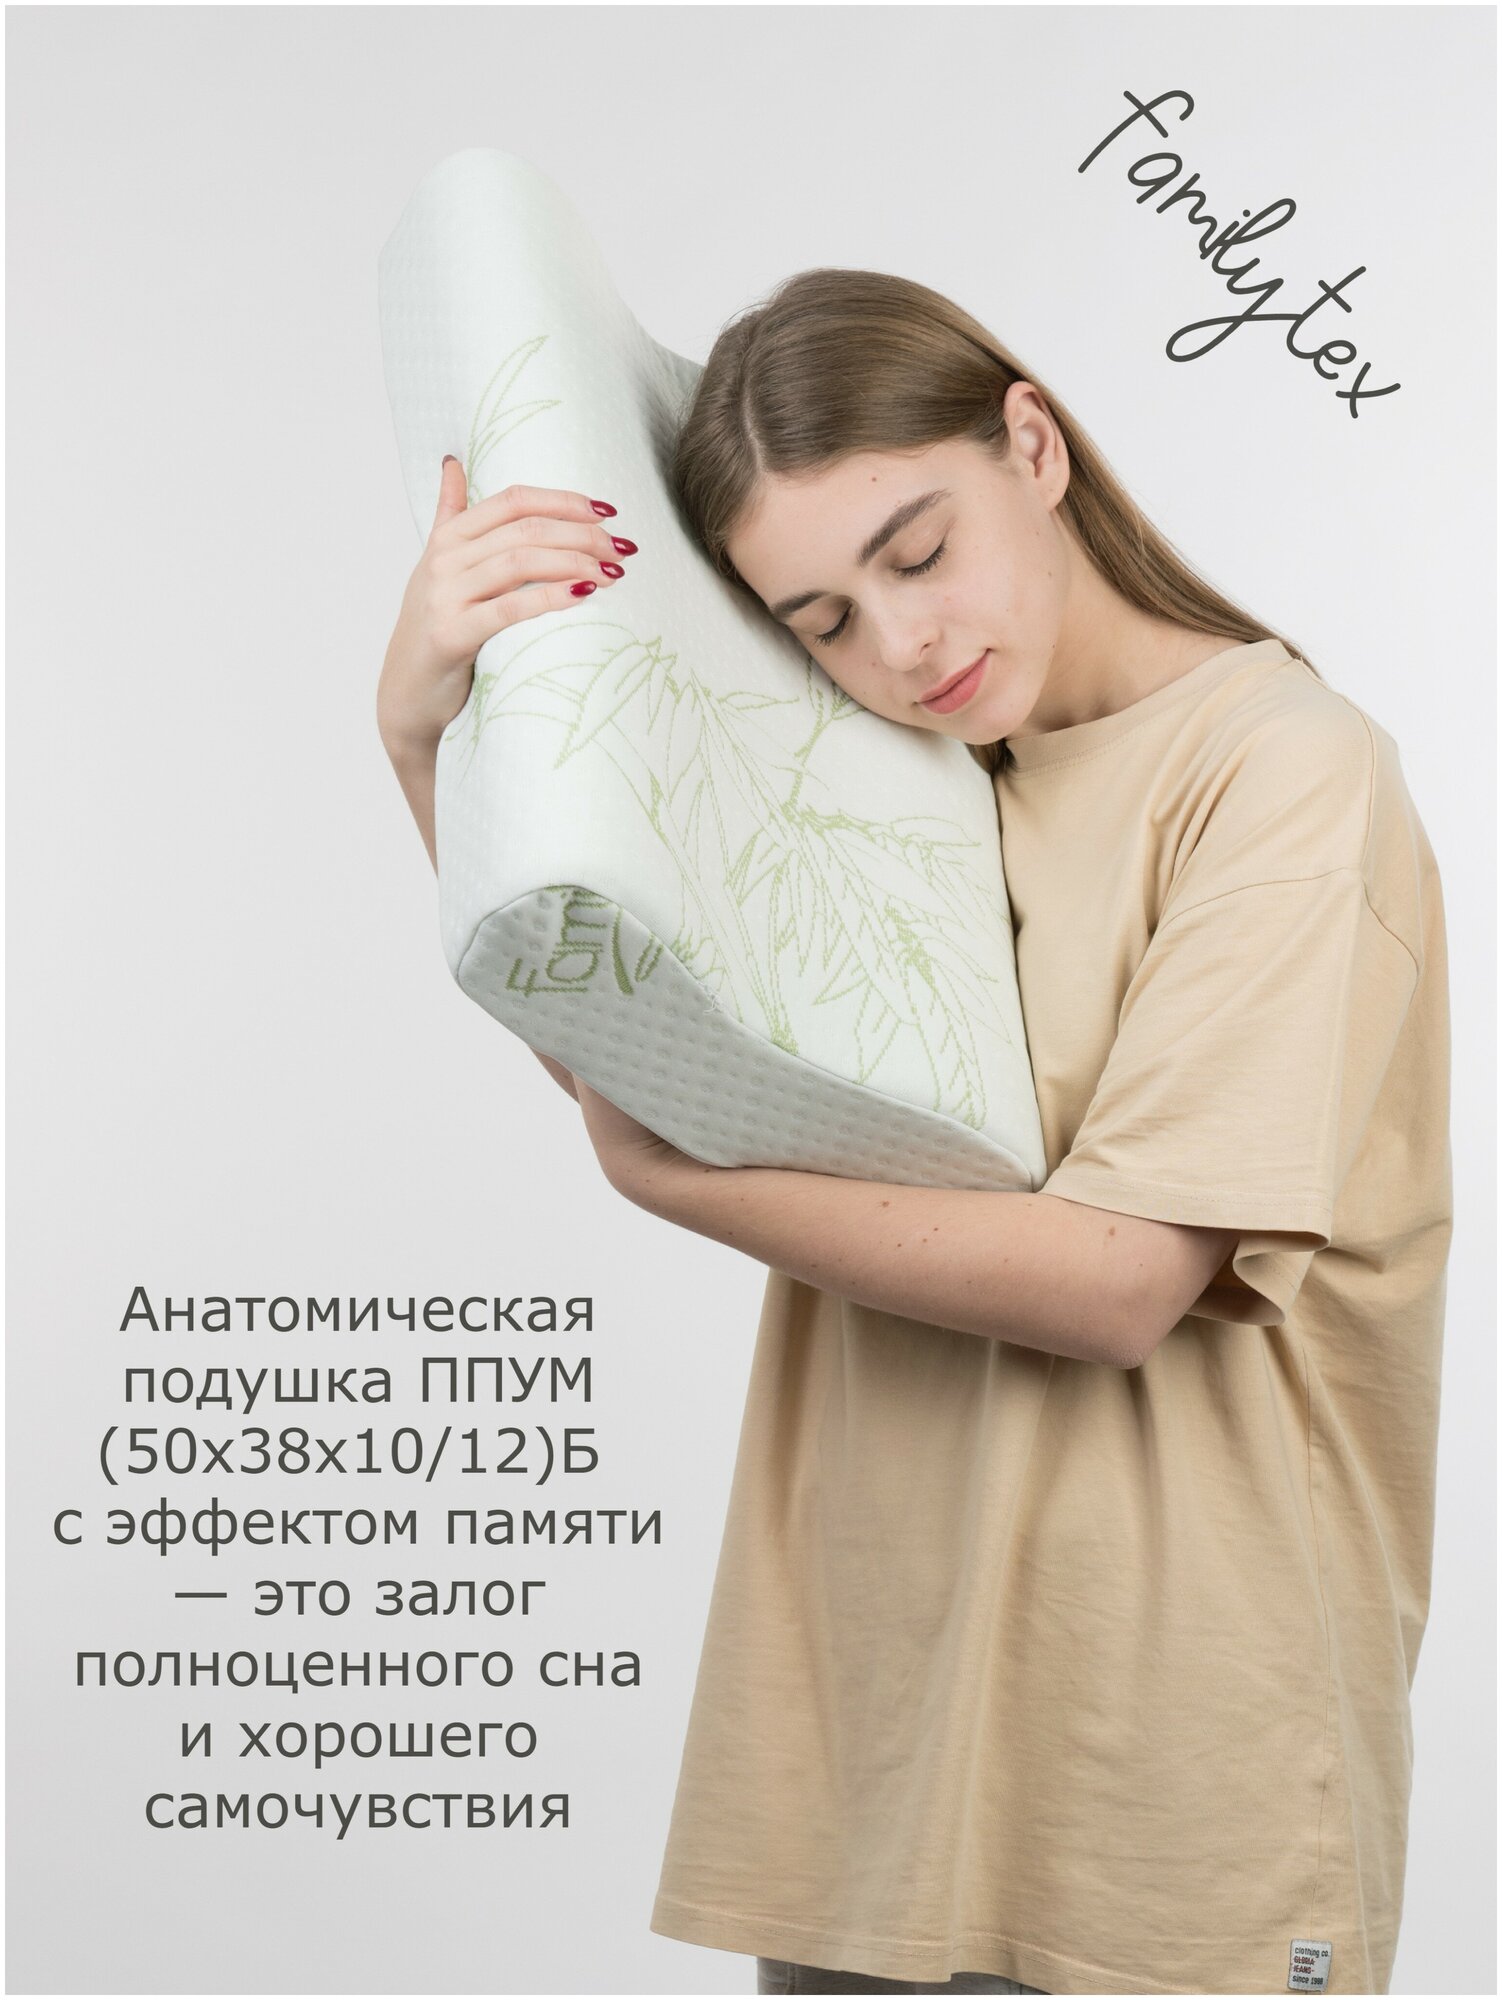 Подушка анатомическая для сна, мемори форм , артикул ппум(50Х38Х10/12)Б - фотография № 3